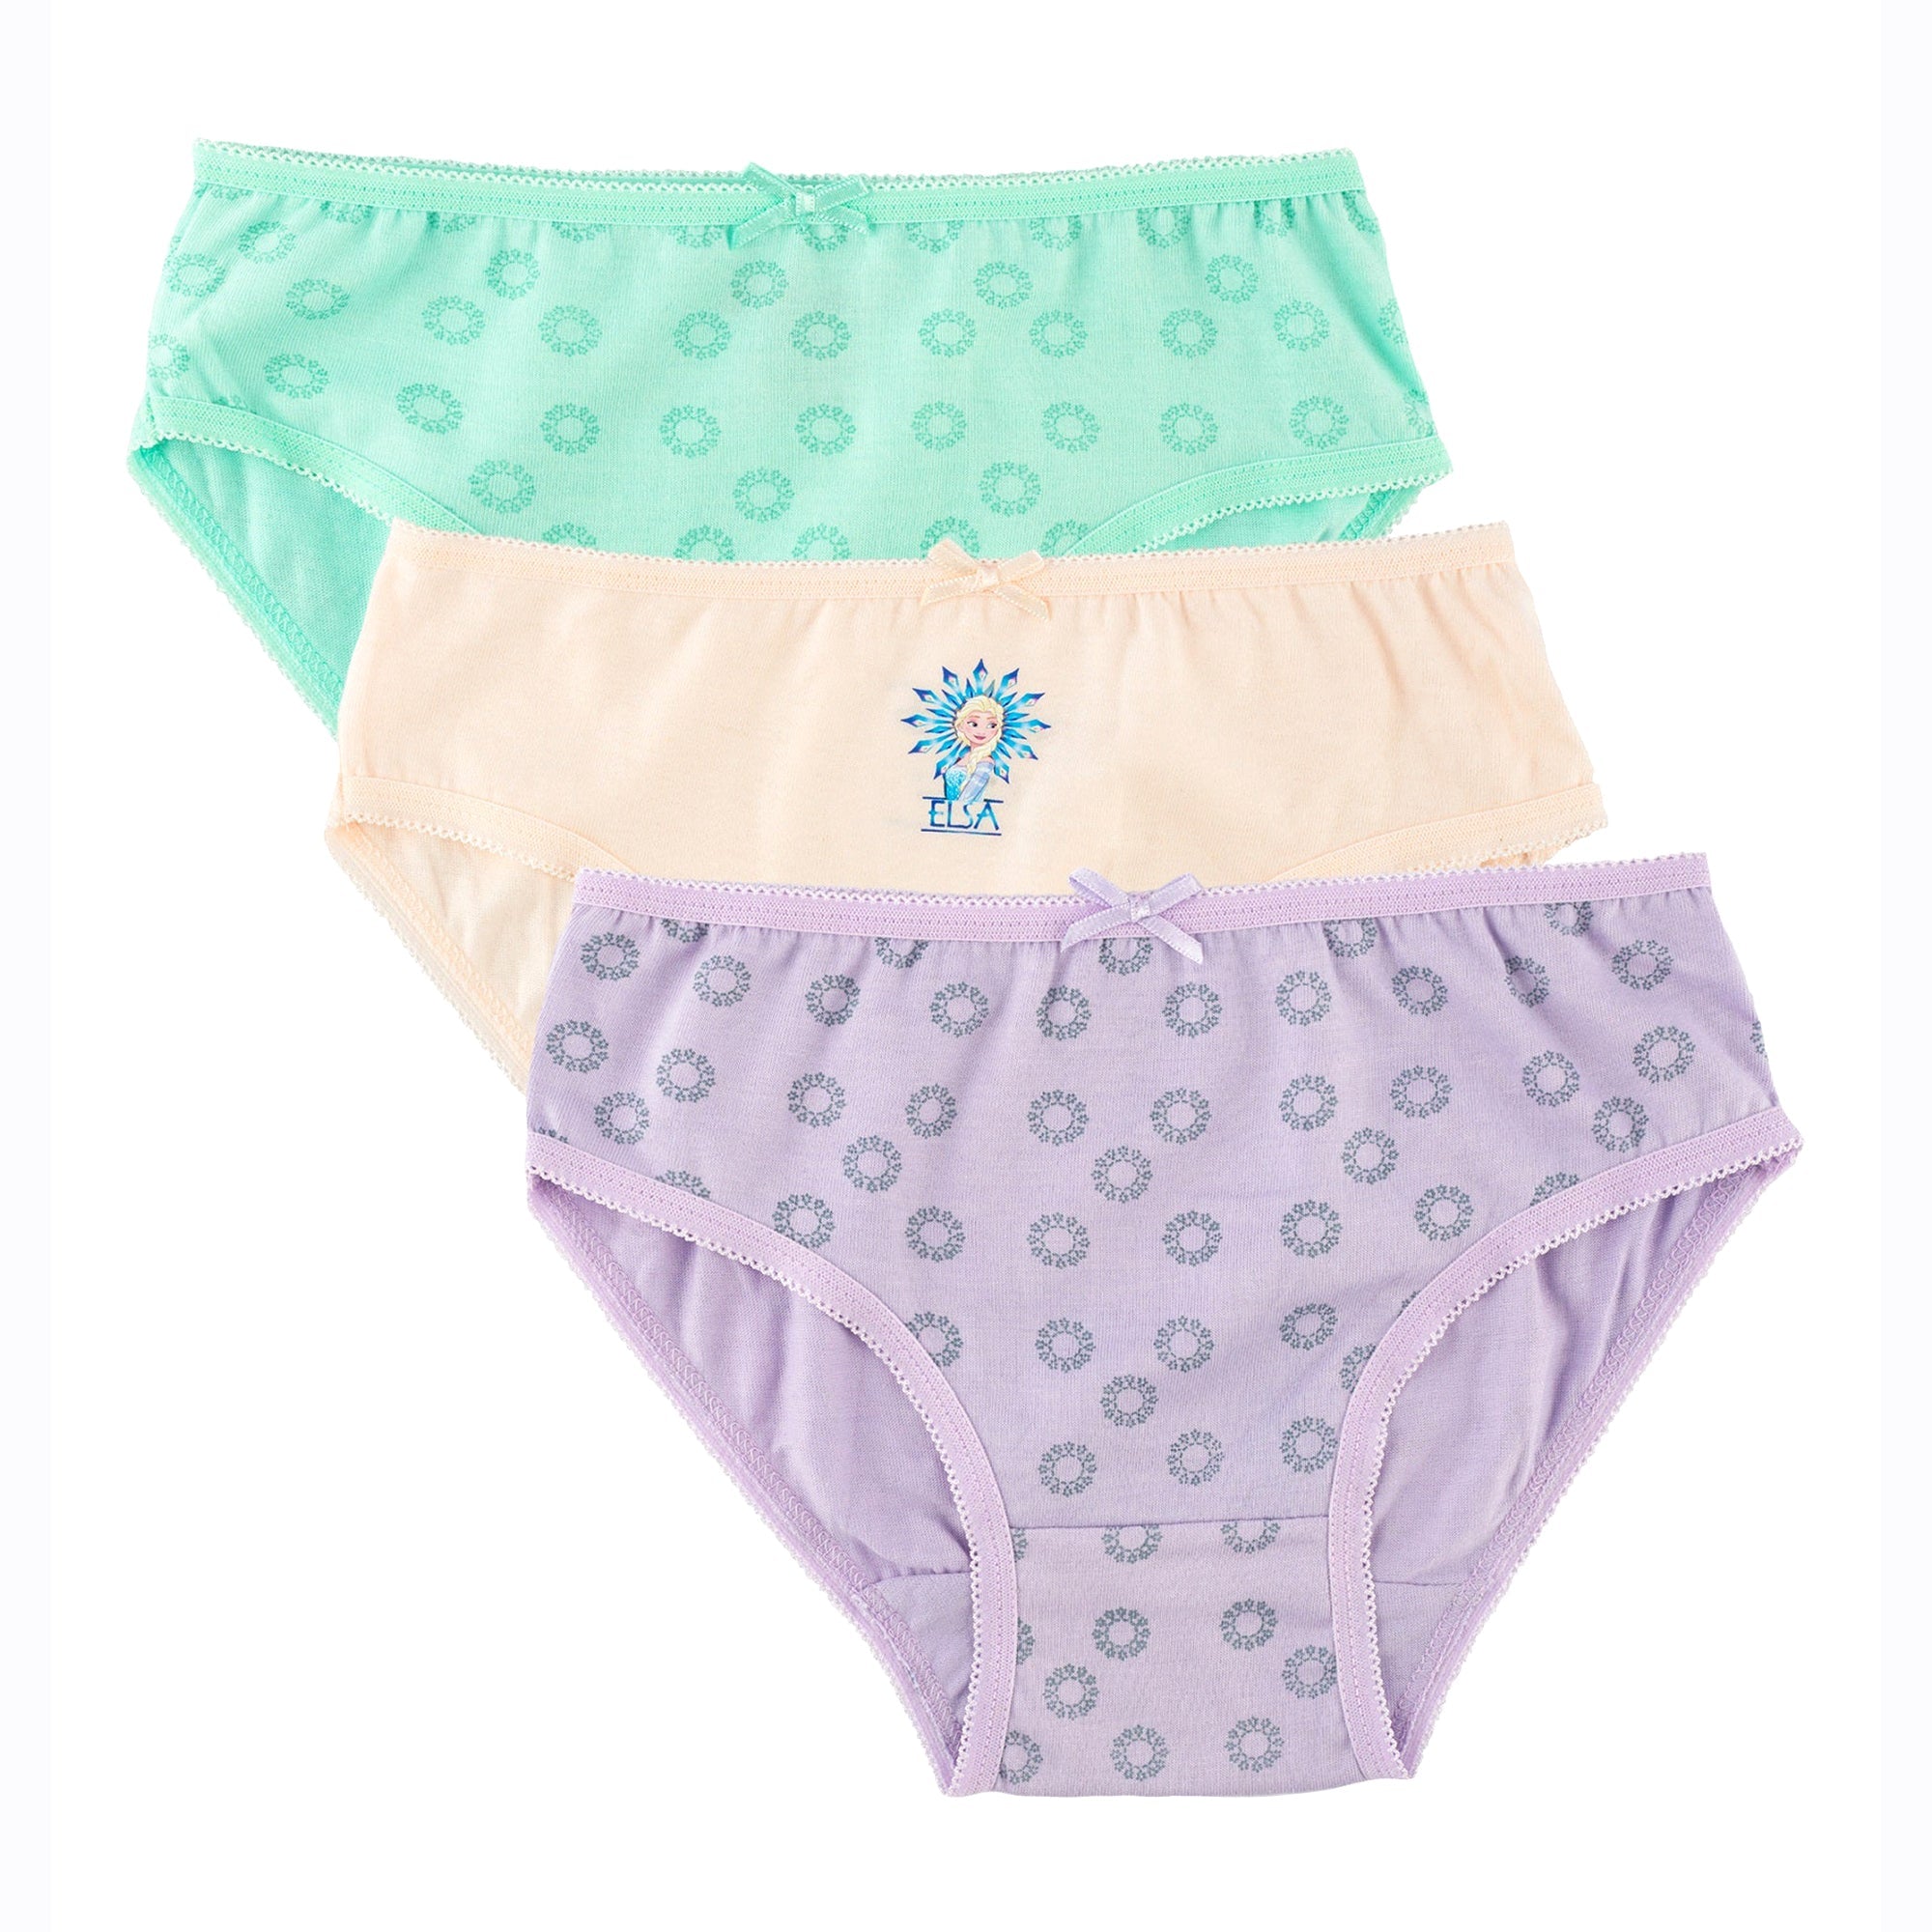 Nuluv Girls Frozen Printed Brief Underwear Innerwear (Multicolor, Pack of 3) - Toys4All.in